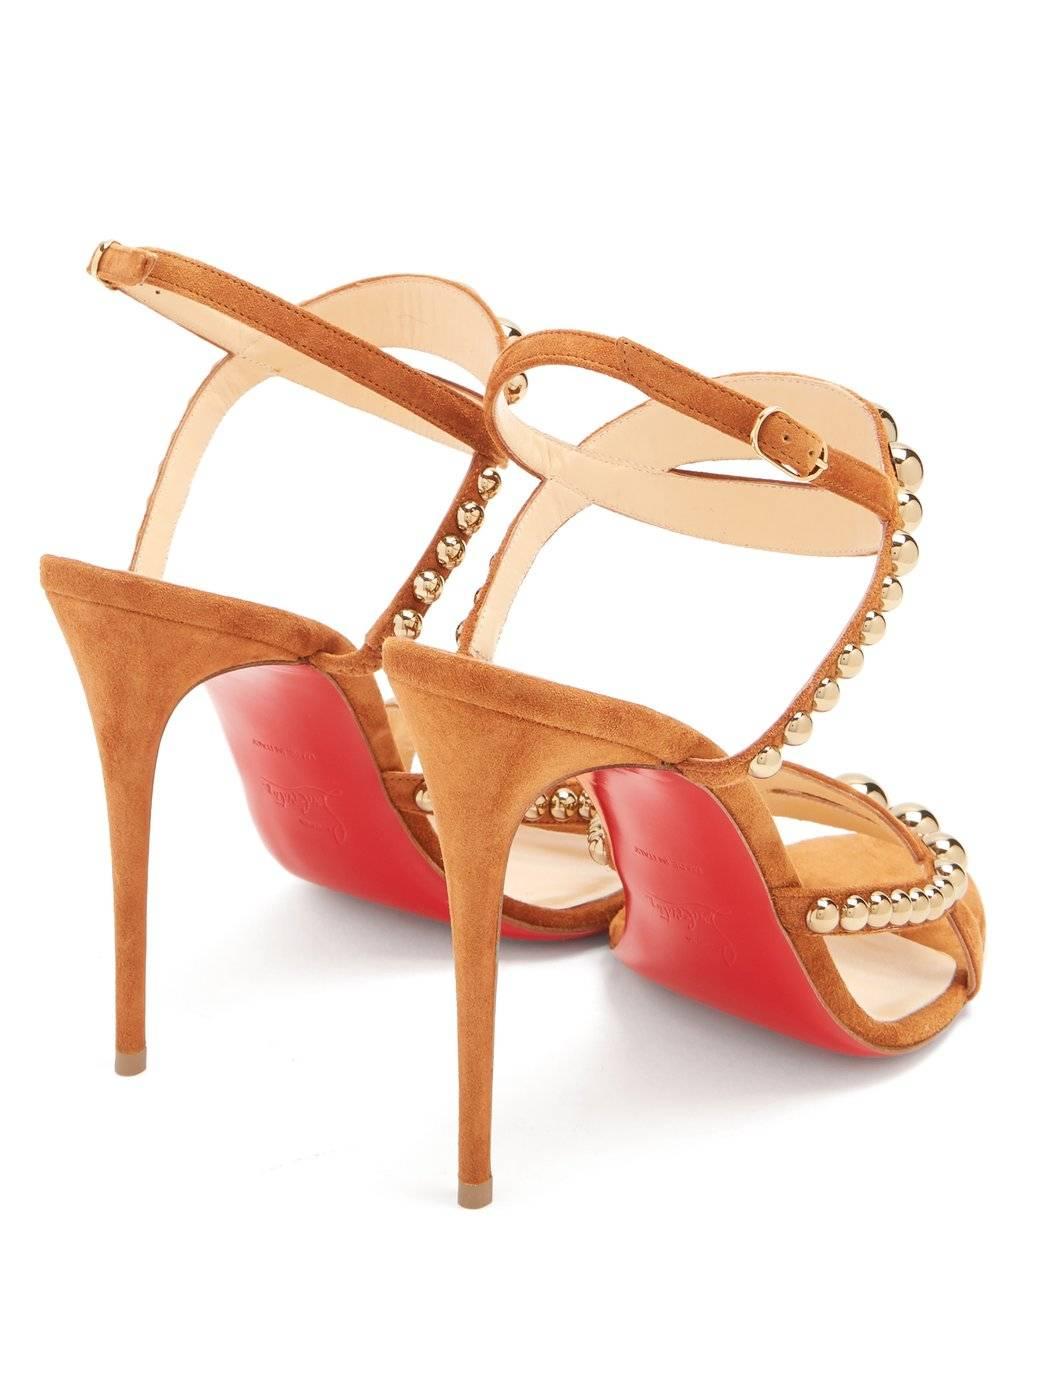 Women's Christian Louboutin New Cognac Suede Gold Stud Evening Sandals Heels 